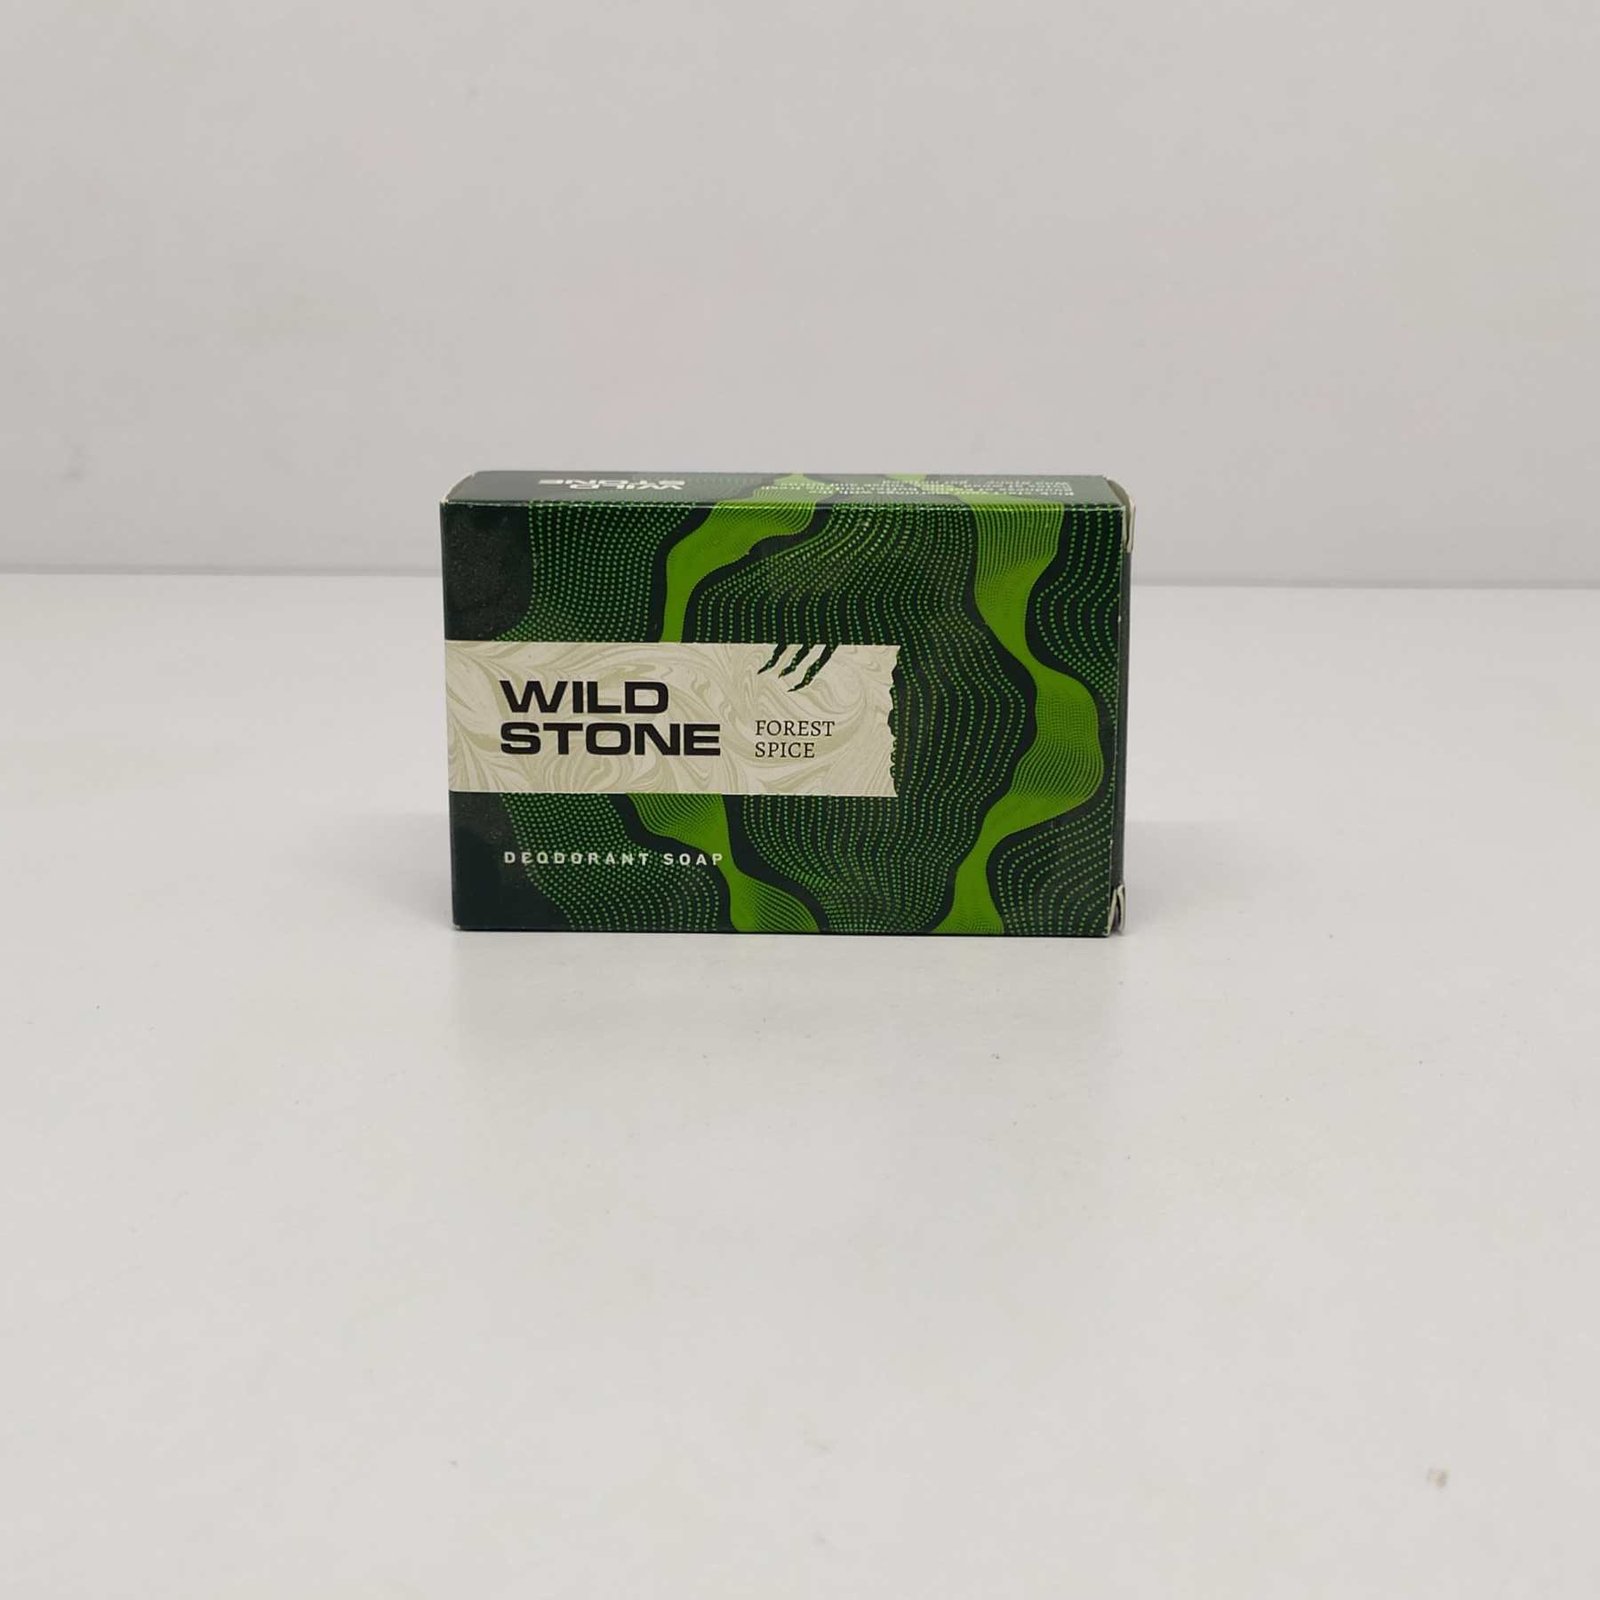 Wild Stone Forest Spice Deodorant soap, 75 grams